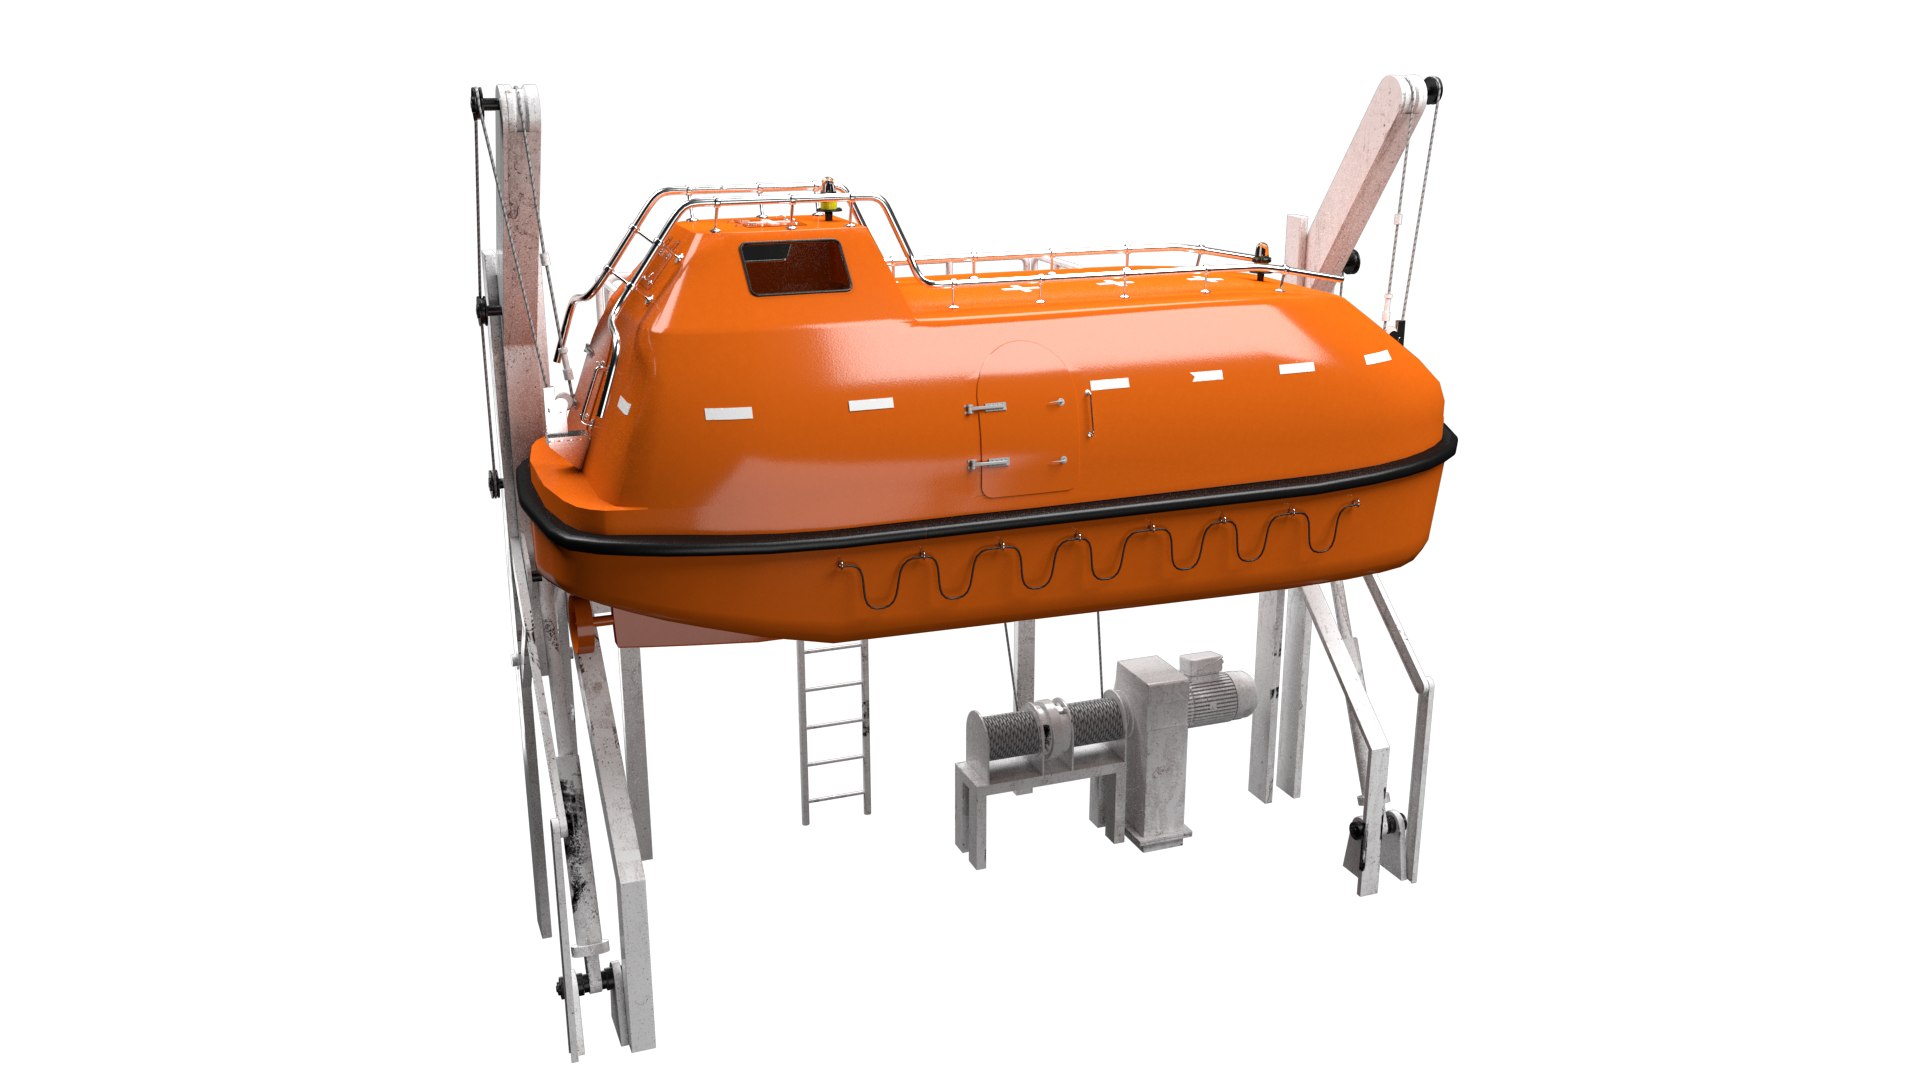 3D fully enclosed lifeboat https://p.turbosquid.com/ts-thumb/uT/PPXRYf/f2VDQj4X/lifeboat_a1/png/1577150874/1920x1080/fit_q87/f7ffee48b5d8f4cdbd46e9ca7f11ee6450f26409/lifeboat_a1.jpg